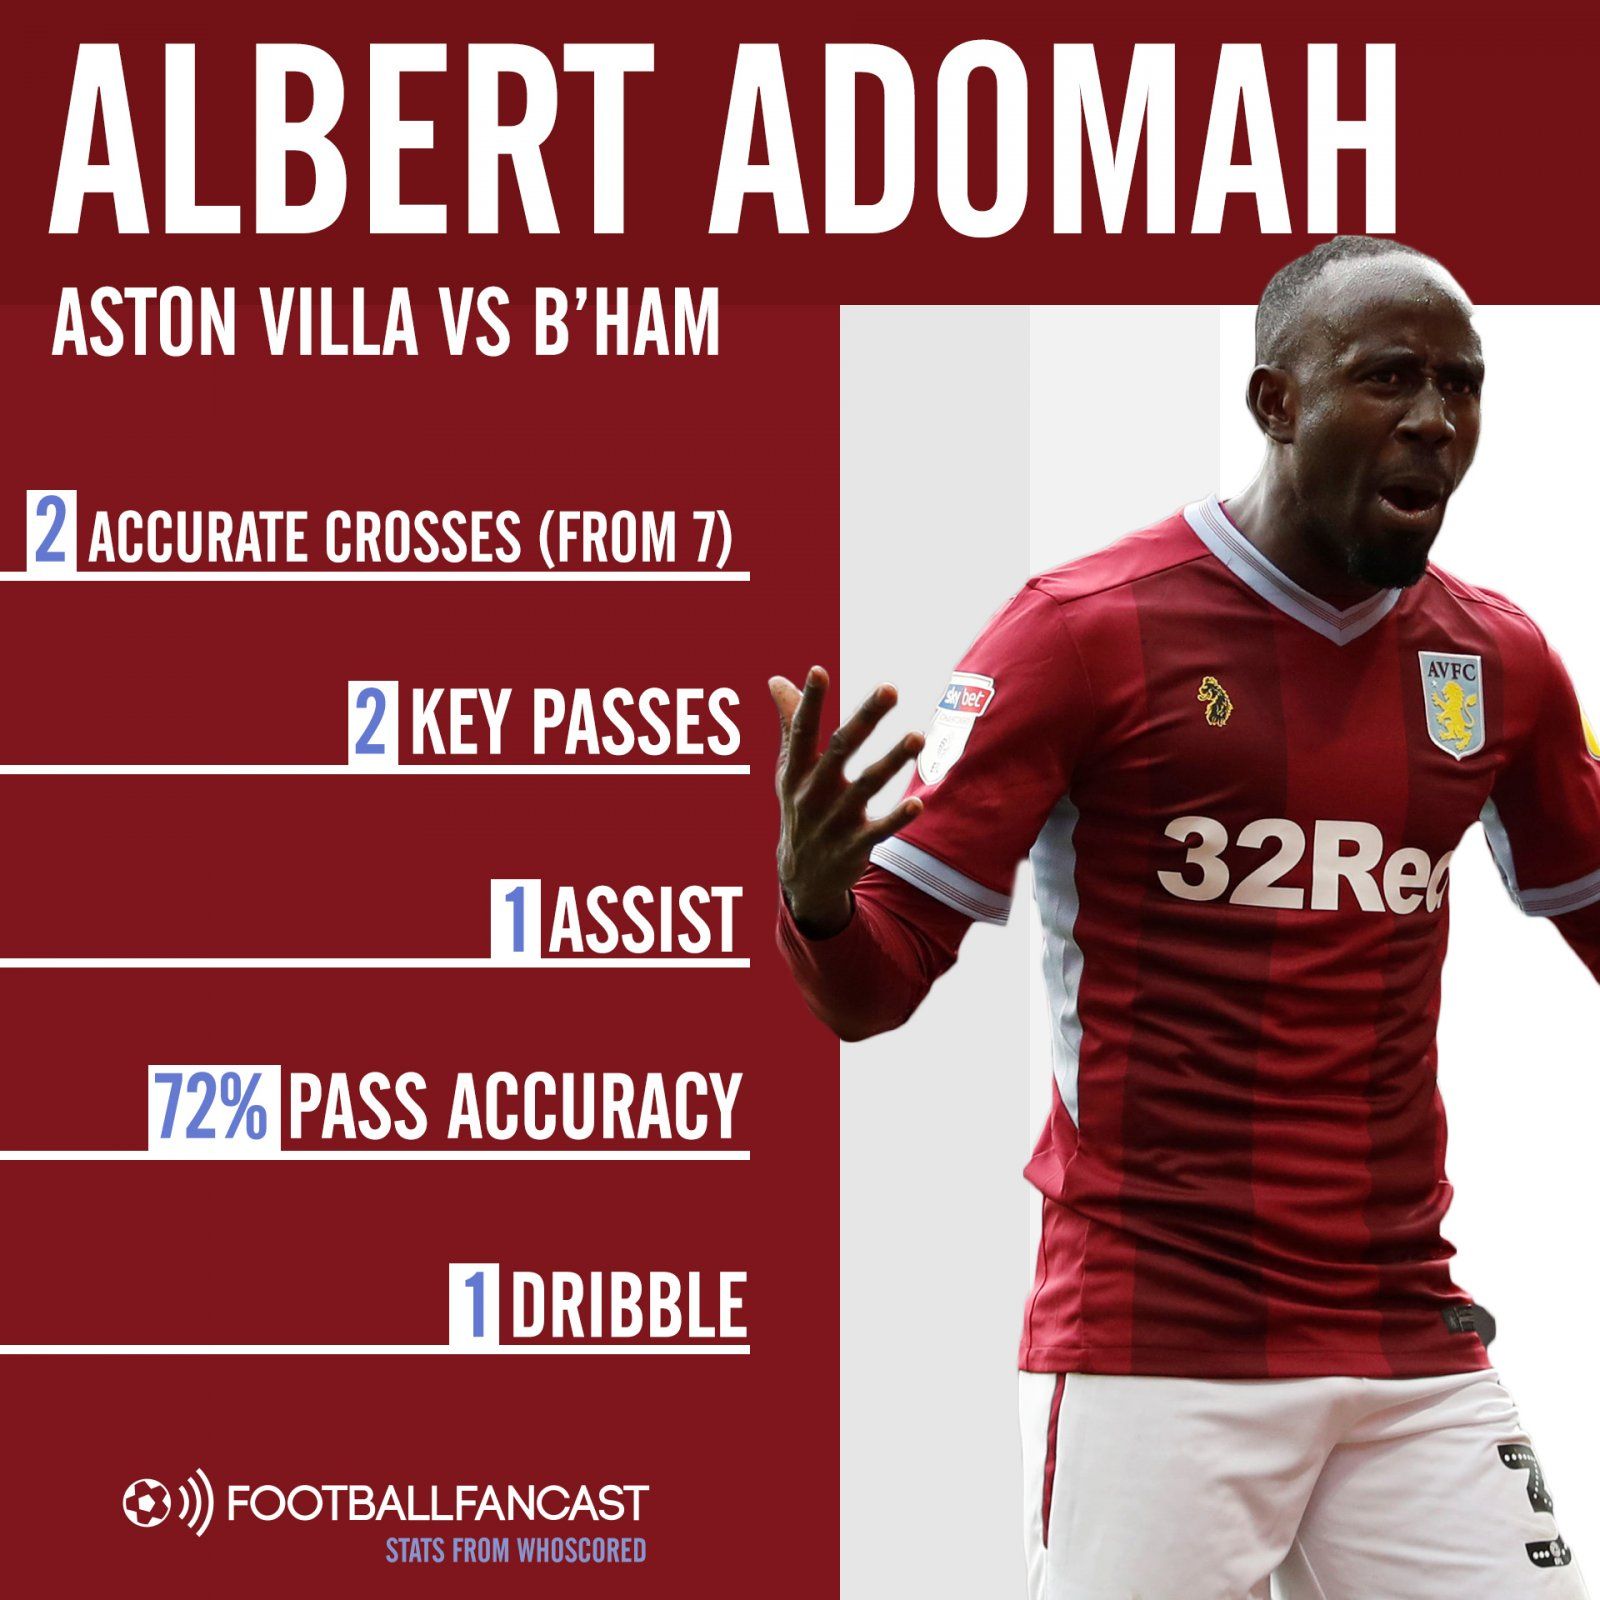 Aston Villa winger Albert Adomah's stats vs Birmingham City